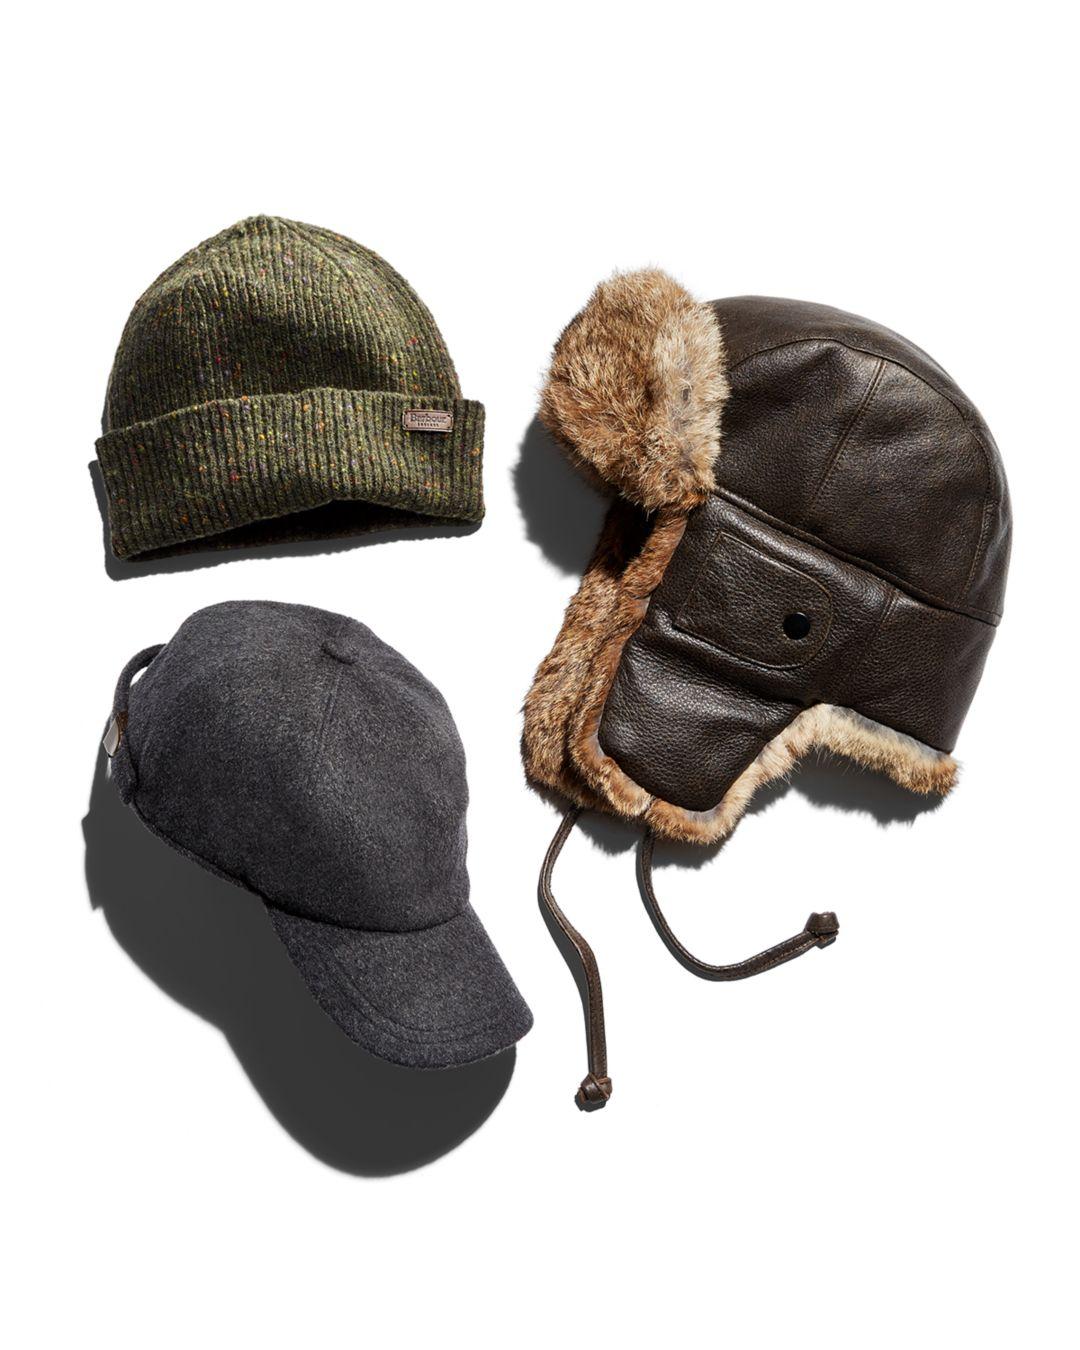 Crown Cap Vintage Leather Fur Aviator Hat in Brown/Natural (Brown) for Men  - Lyst